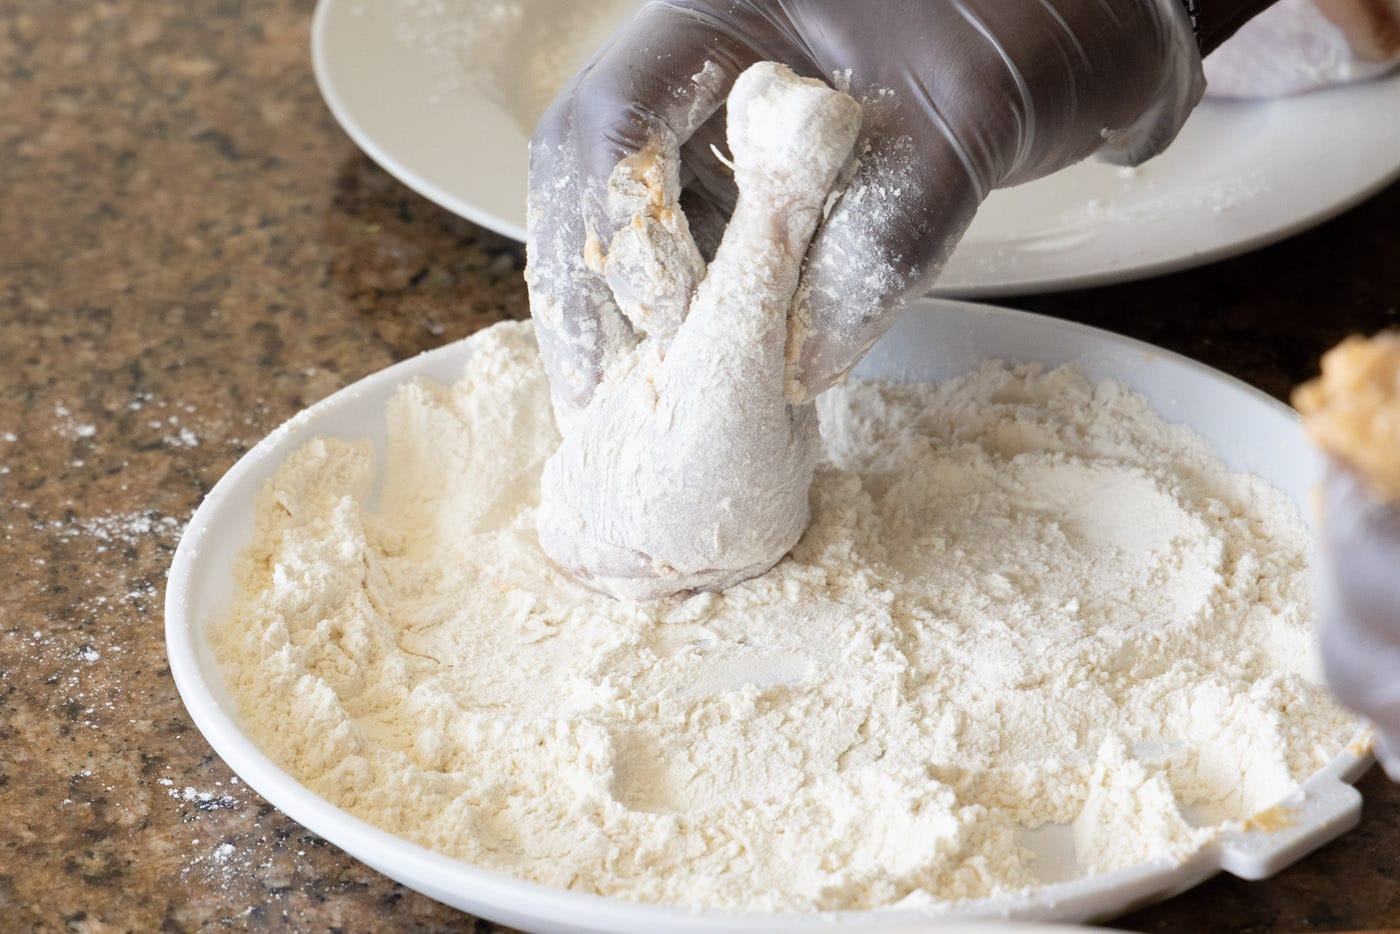 coating chicken legs in flour